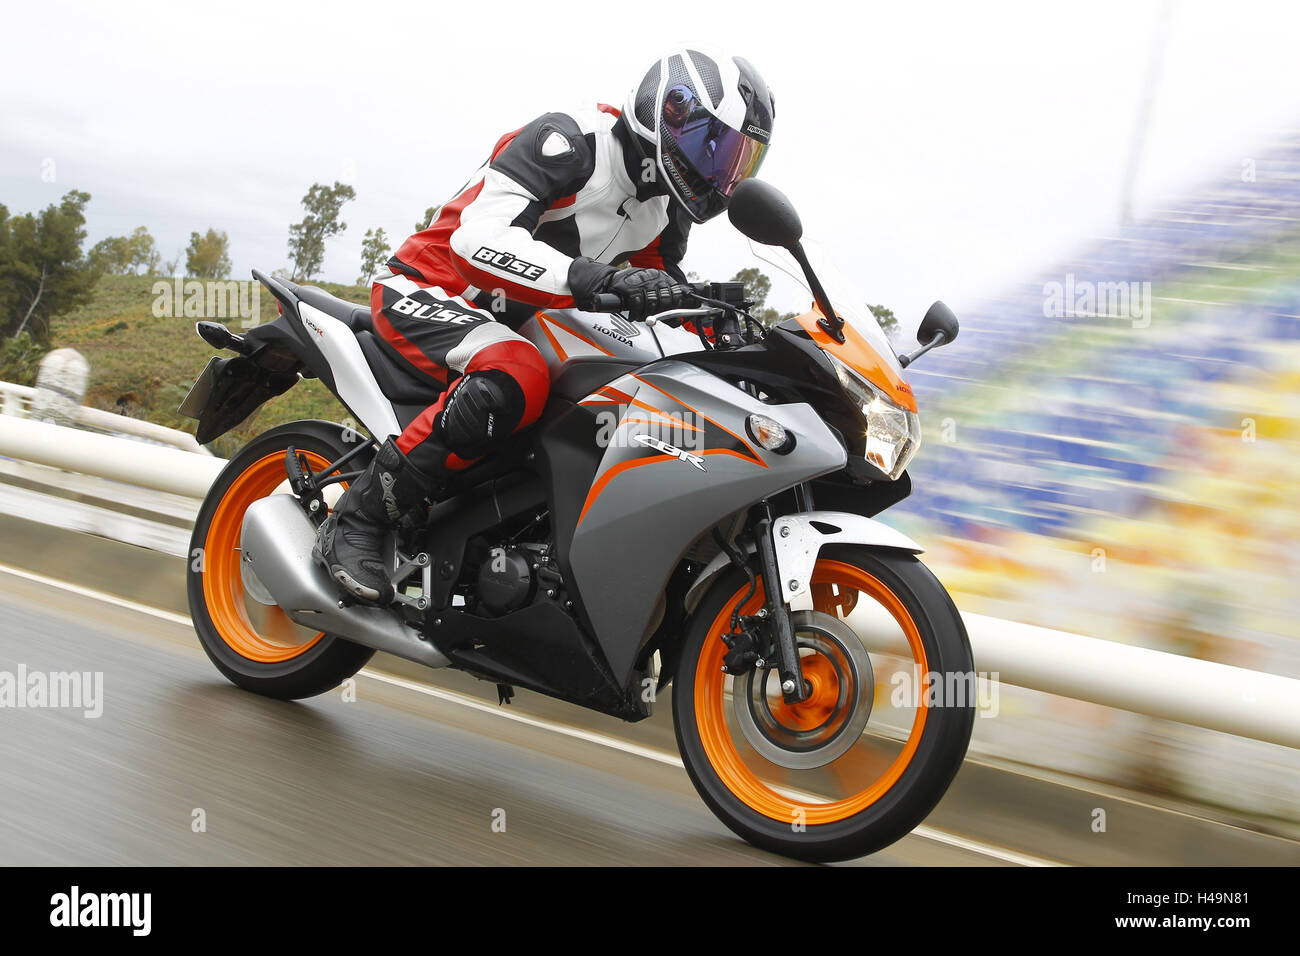 Motociclo Honda CBR 125R, offuscata motion, spostamento Foto Stock